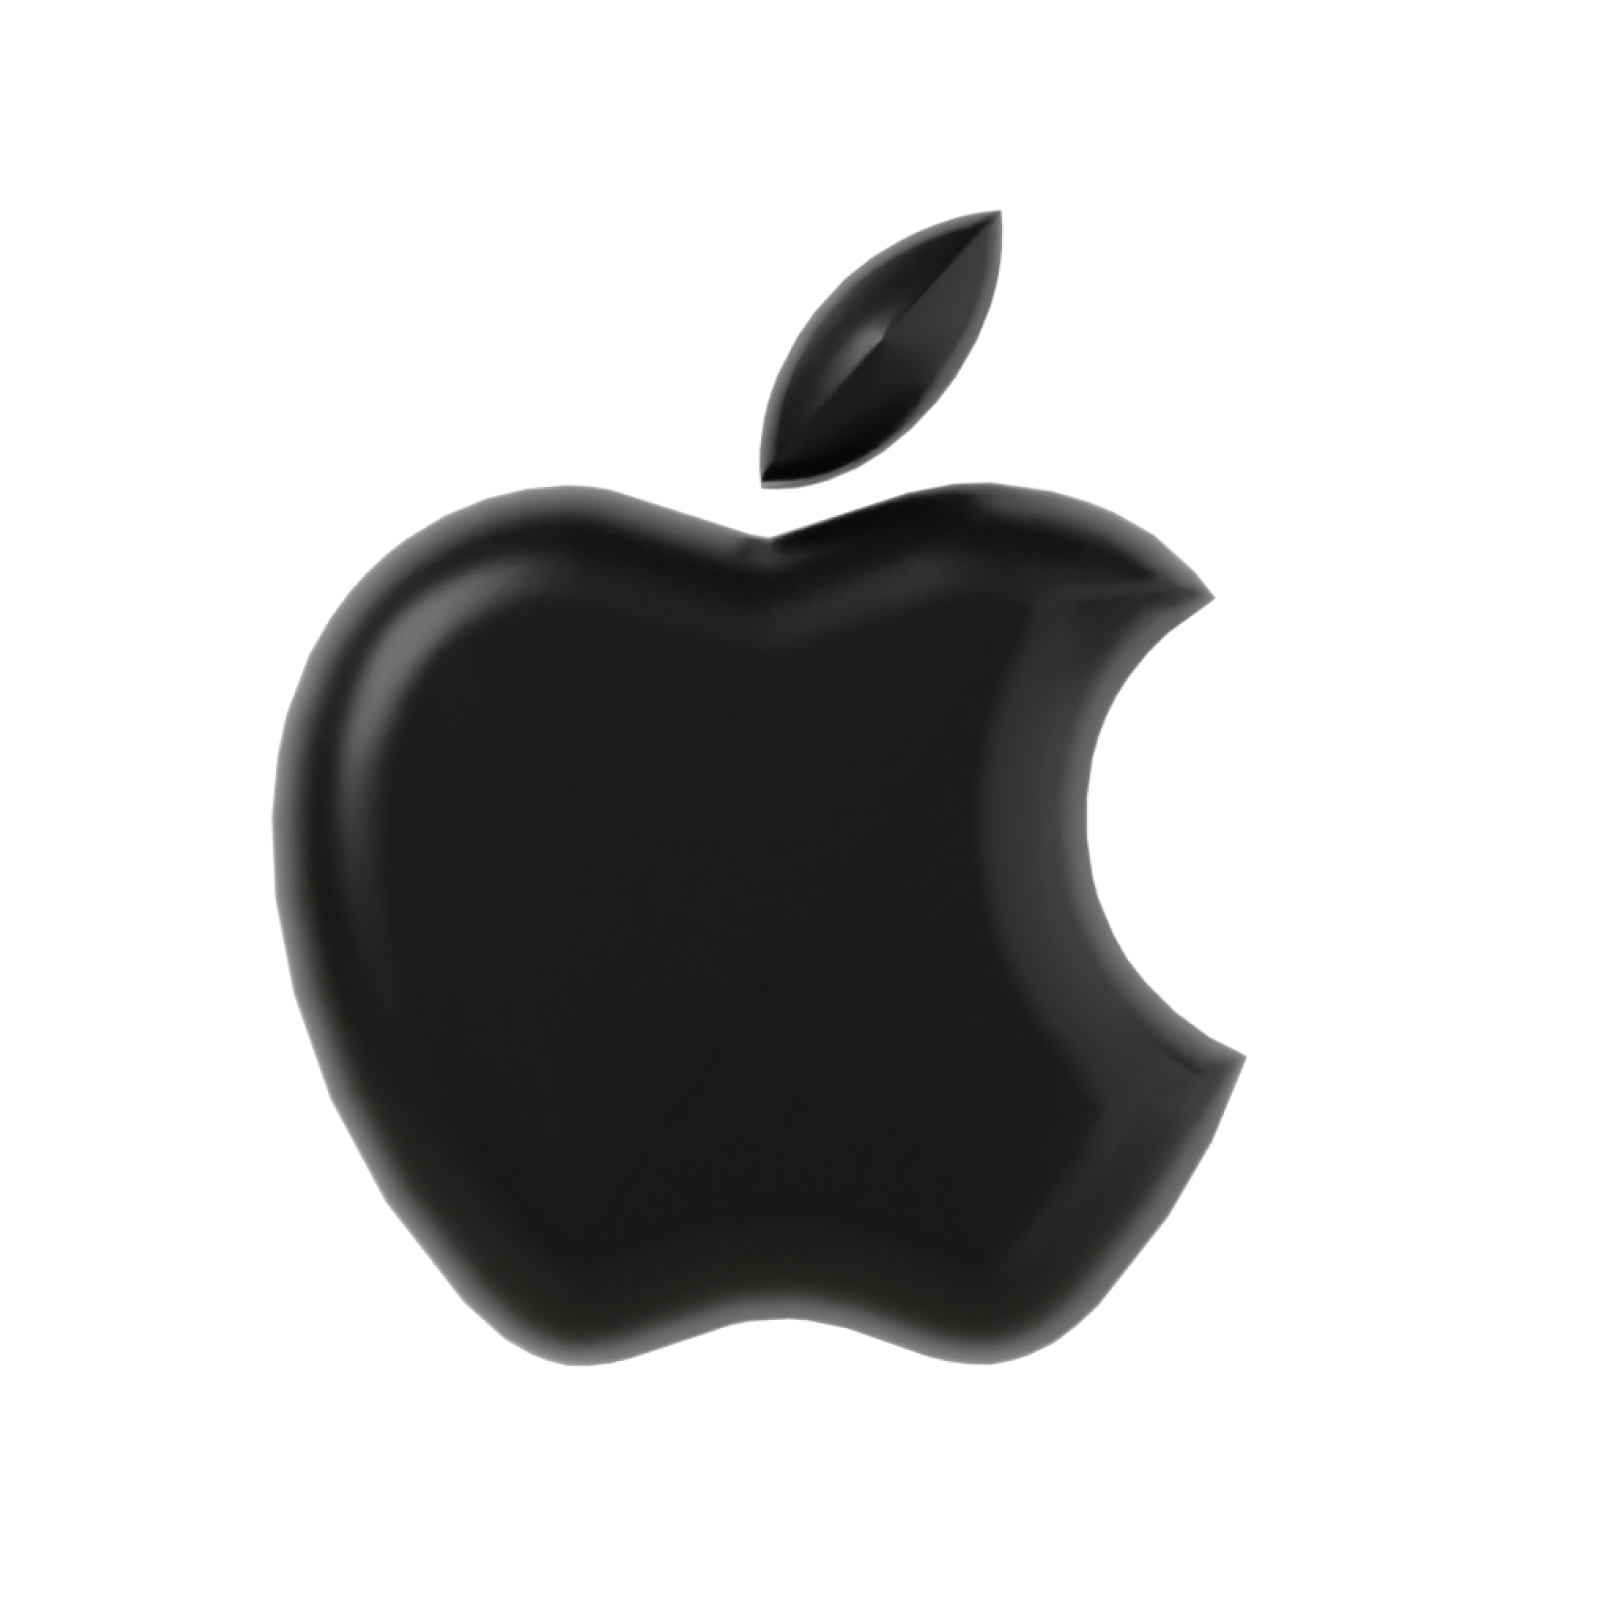 Company=Apple